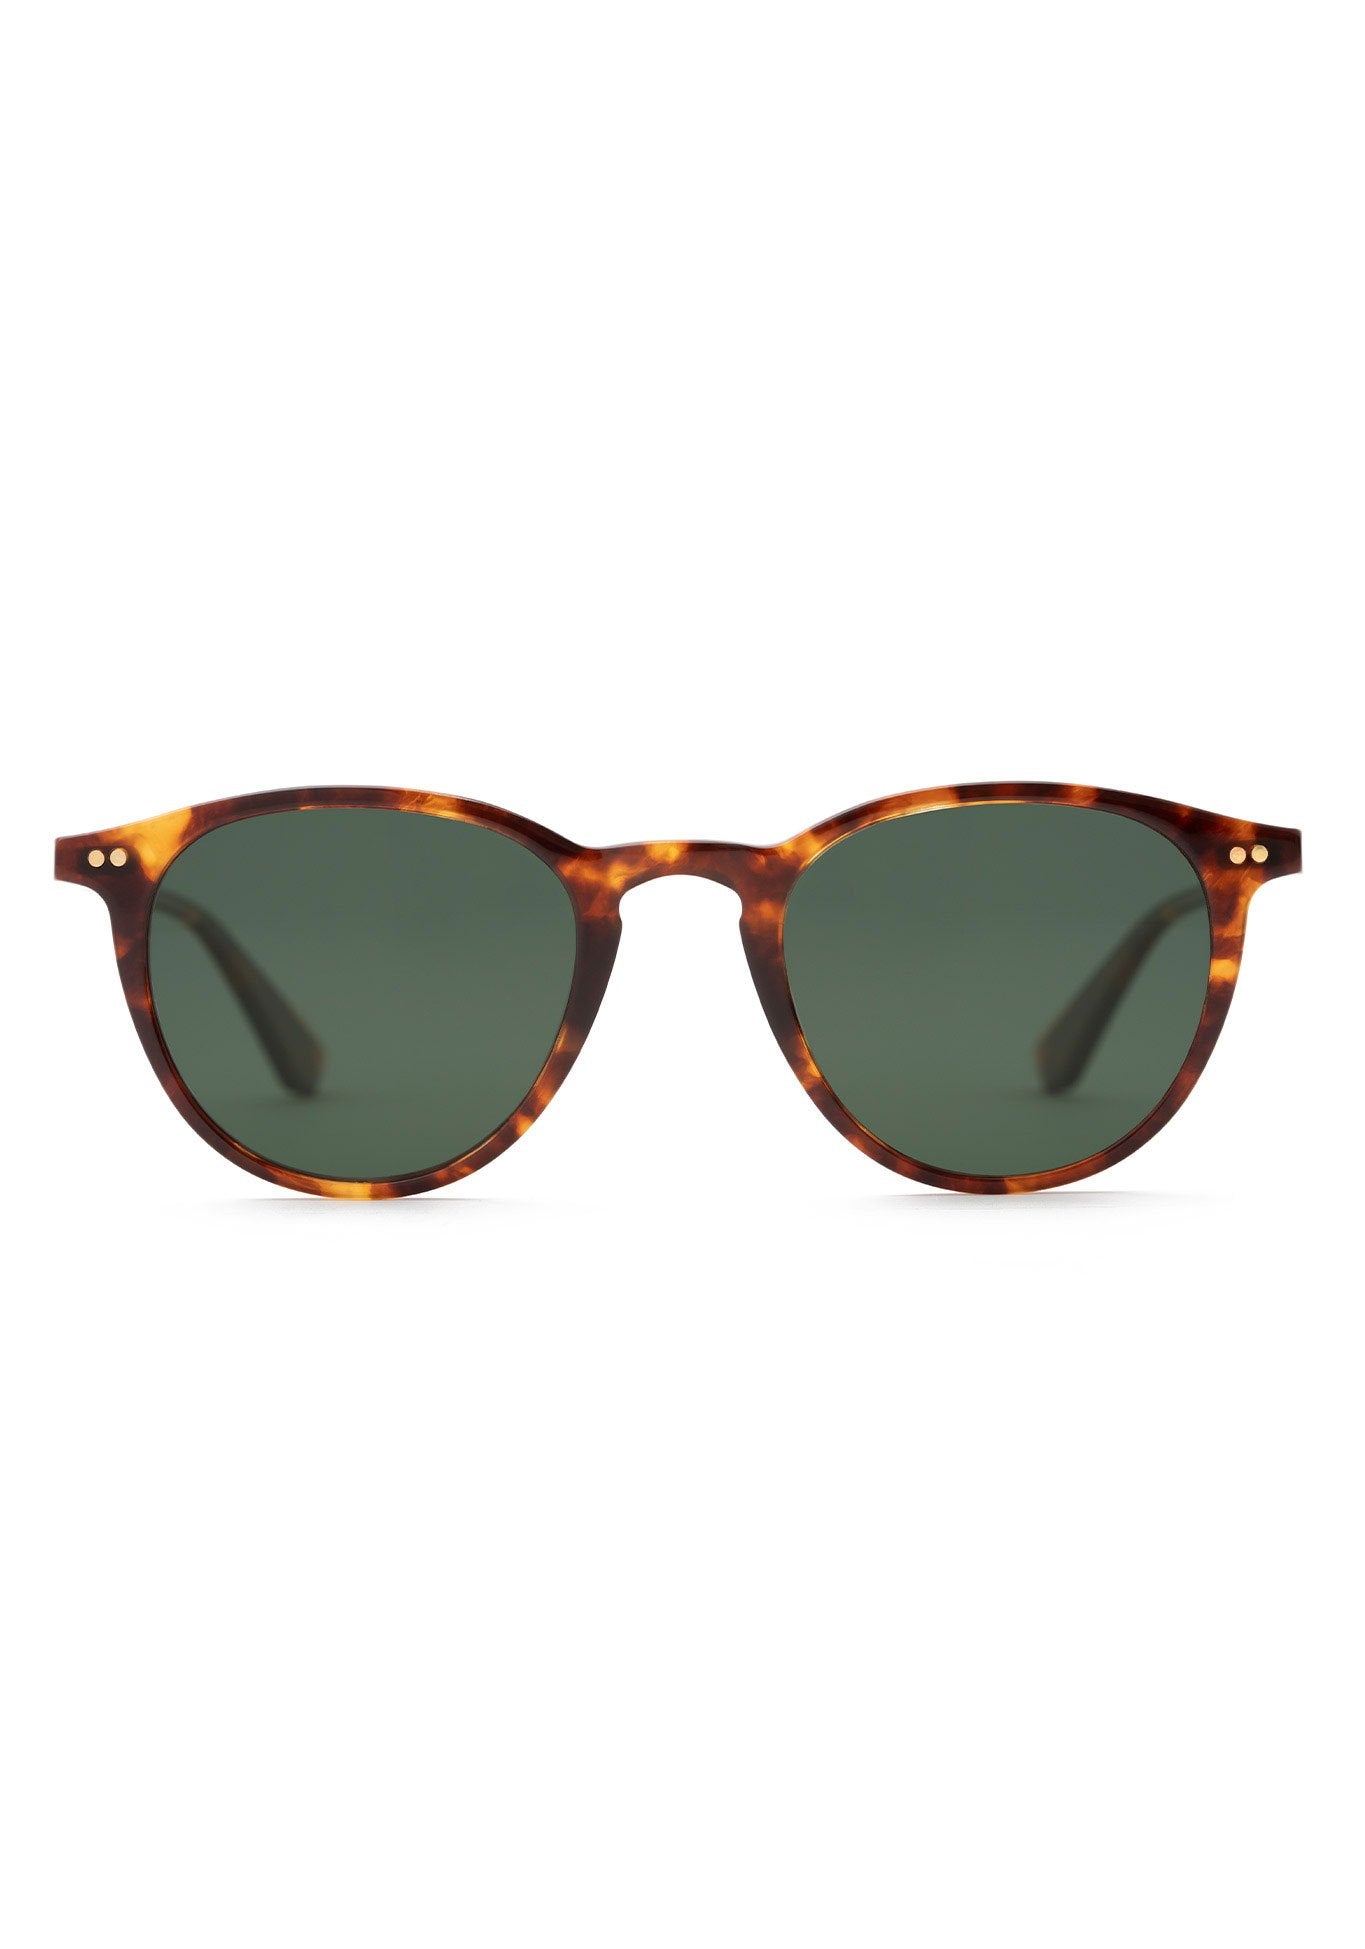 KREWE KENNER - Rye - Men/Women Polarized Round Sunglasses - 48